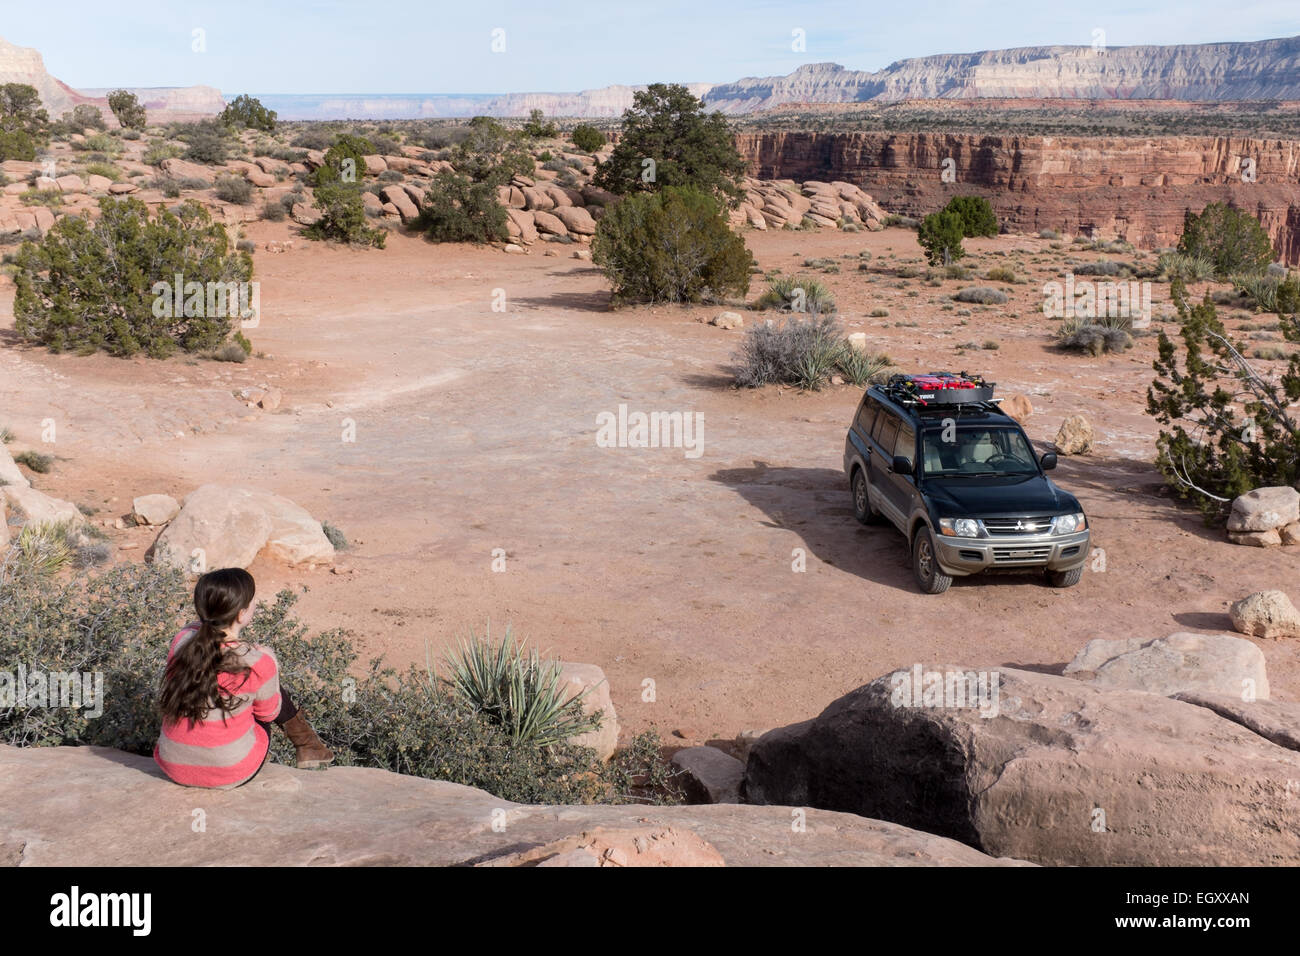 Adolescente et chariot à Totoweep Tuweep surplombent, Grand Canyon, Arizona, USA Banque D'Images